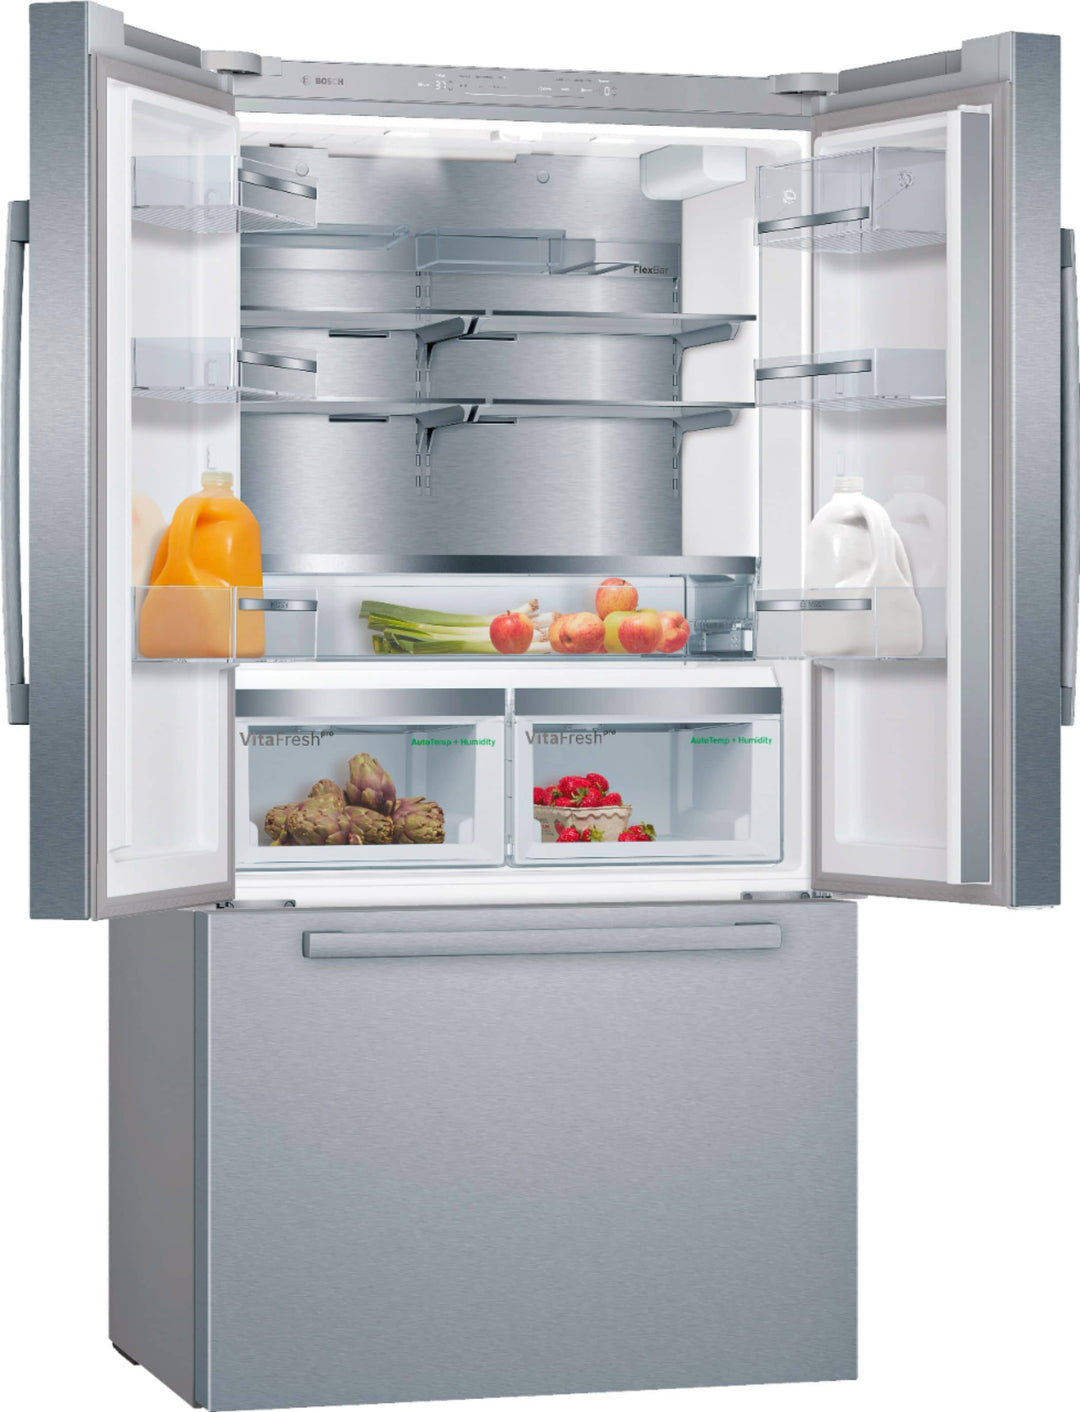 Bosch - 800 Series 21 Cu. Ft. French Door Counter-Depth Smart Refrigerator - Stainless steel_13